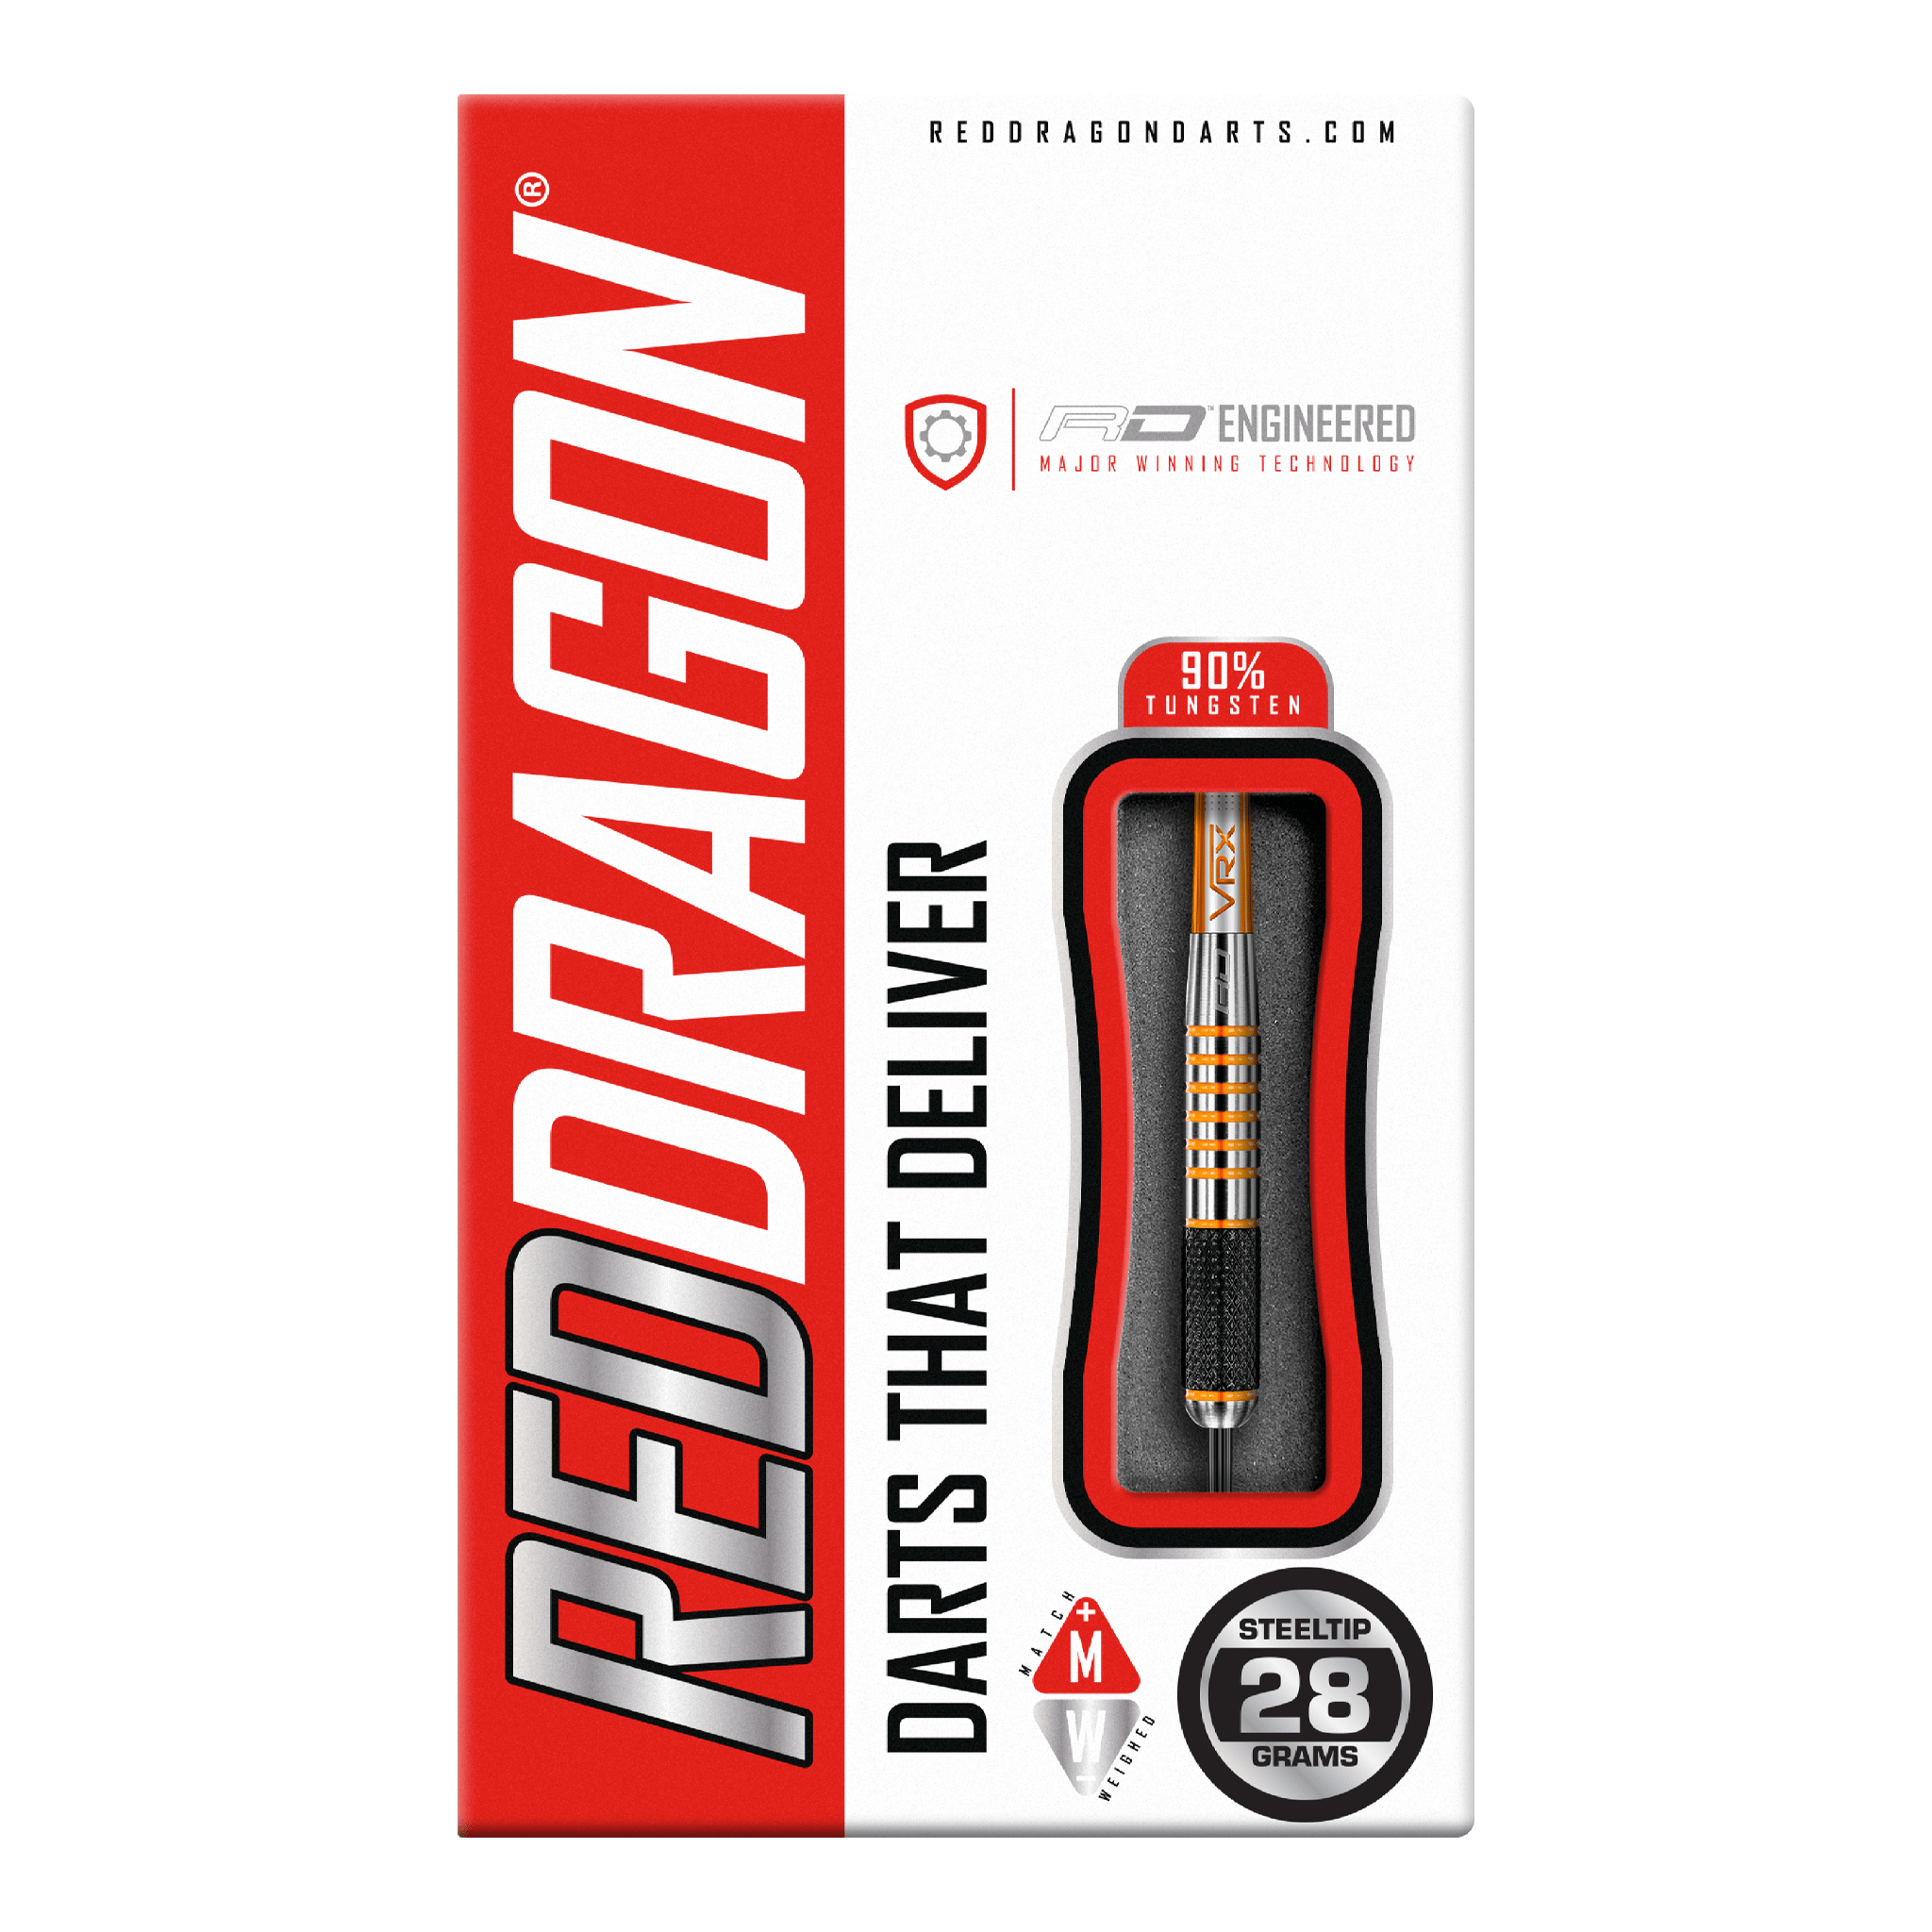 Red Dragon Amberjack 9 - 90% Tungsten Steel Tip Darts 28 Grams Darts